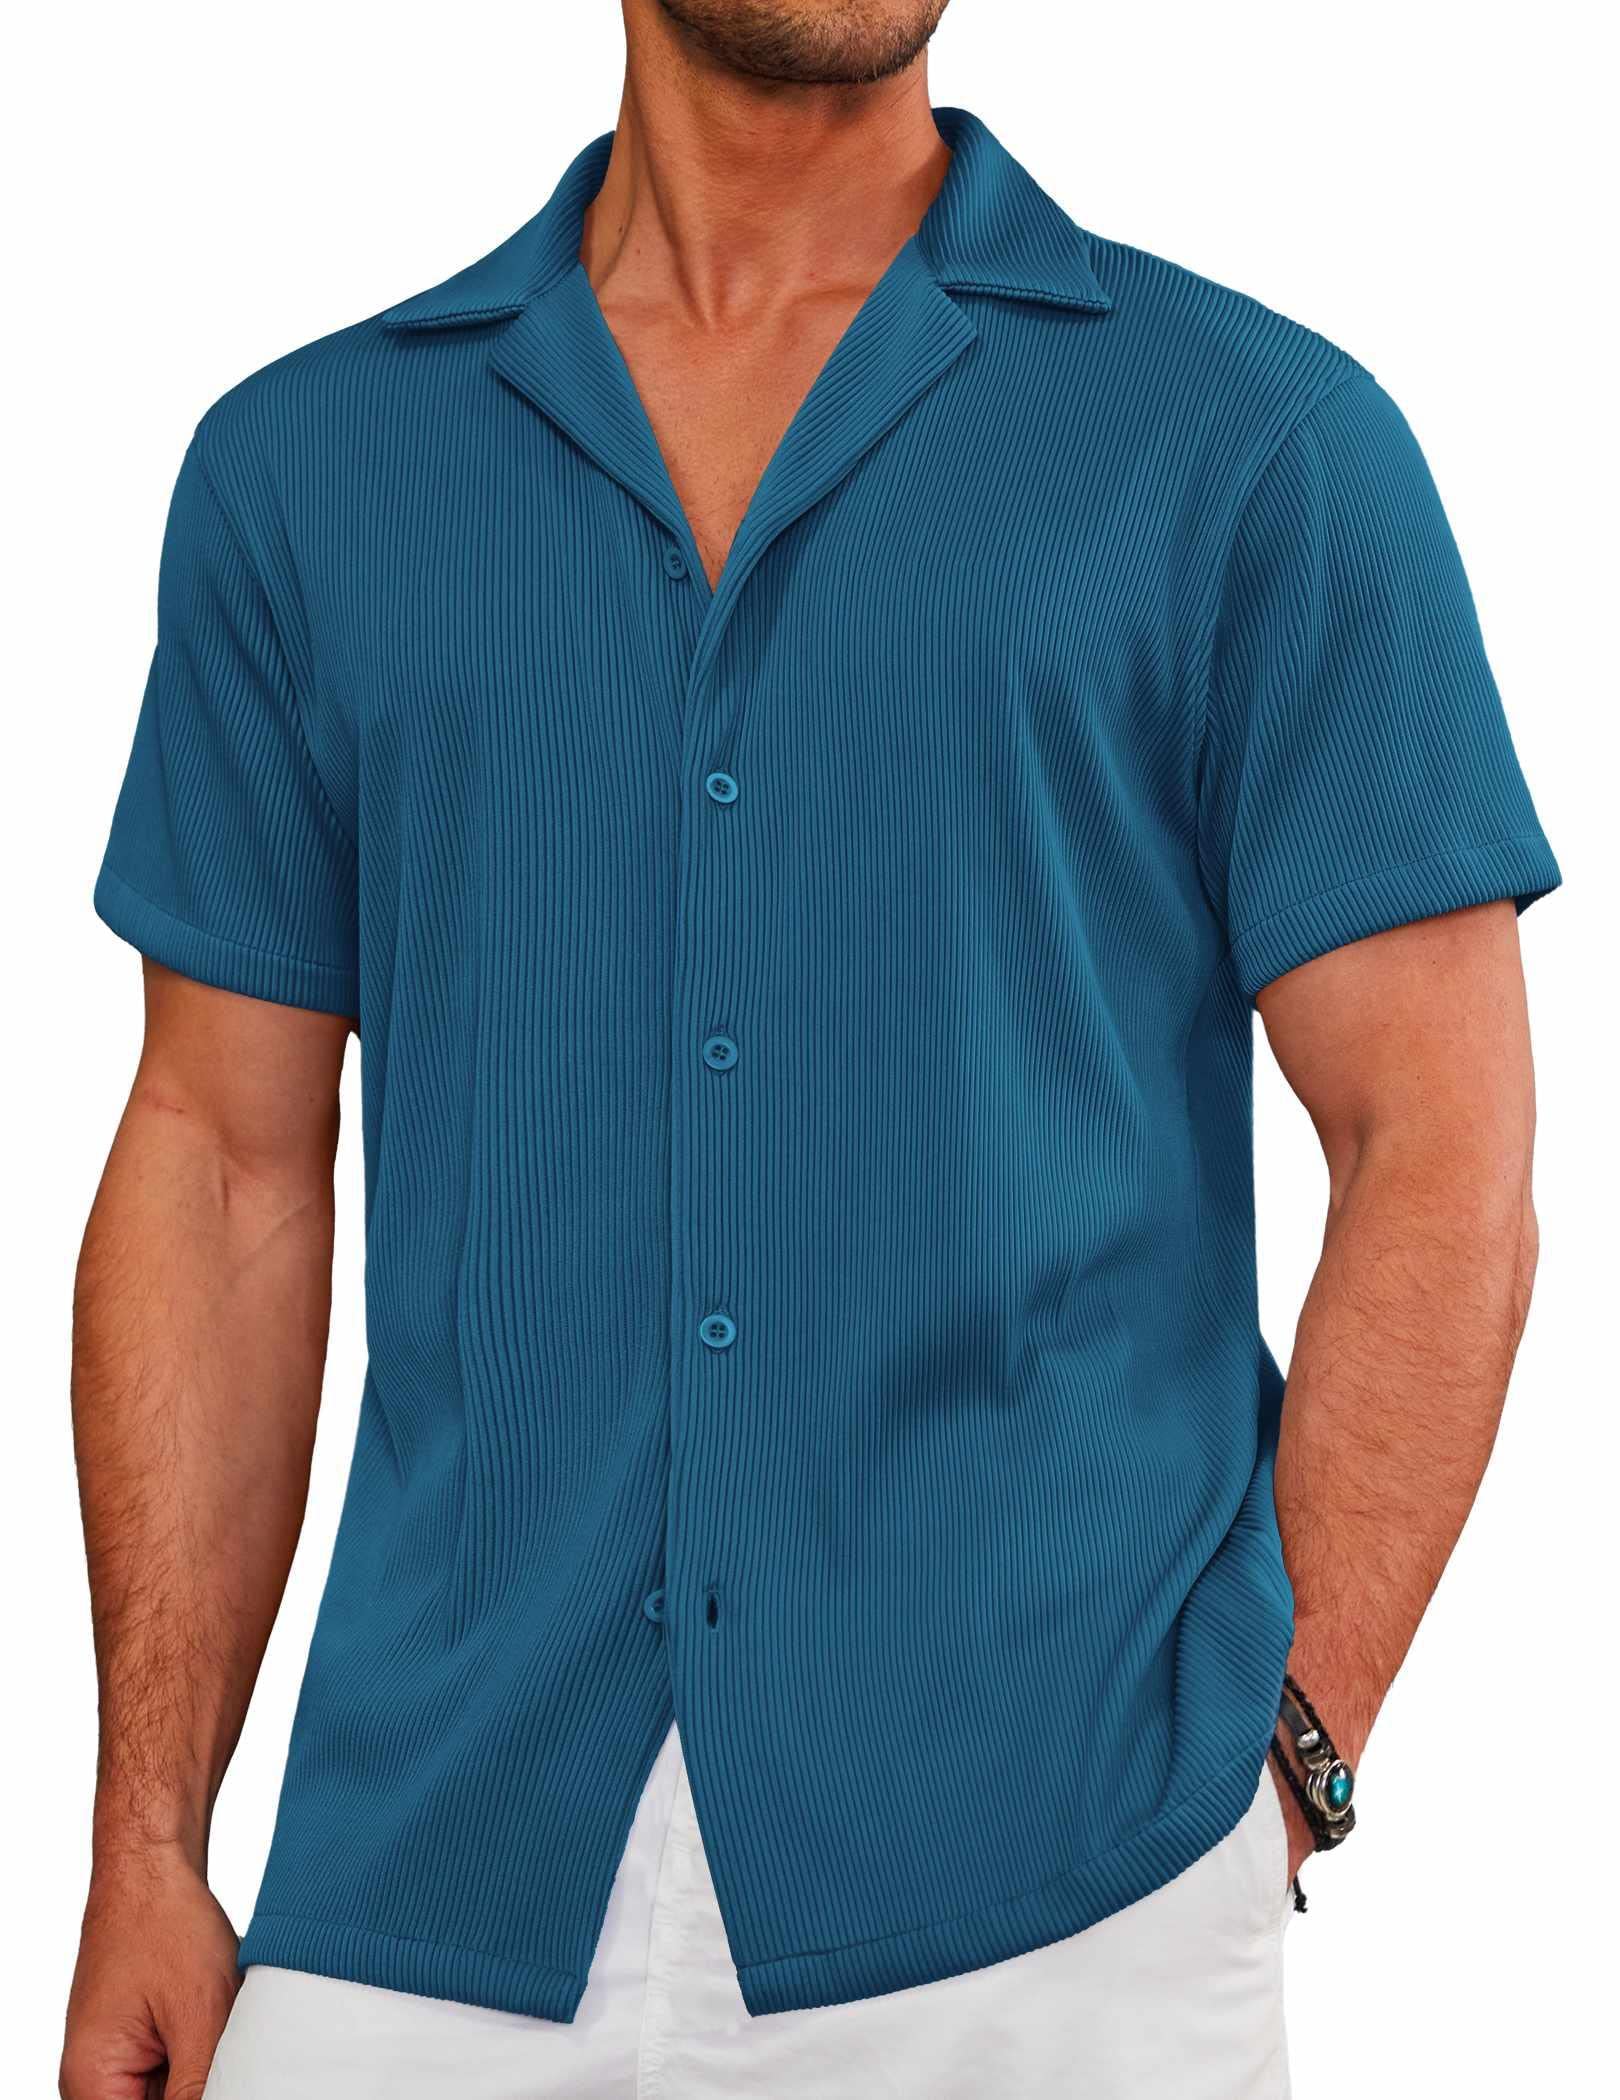 COOFANDY Men's Linen Henley Shirt Long Sleeve Casual Hippie Cotton Beach T  Shirts : : Clothing, Shoes & Accessories